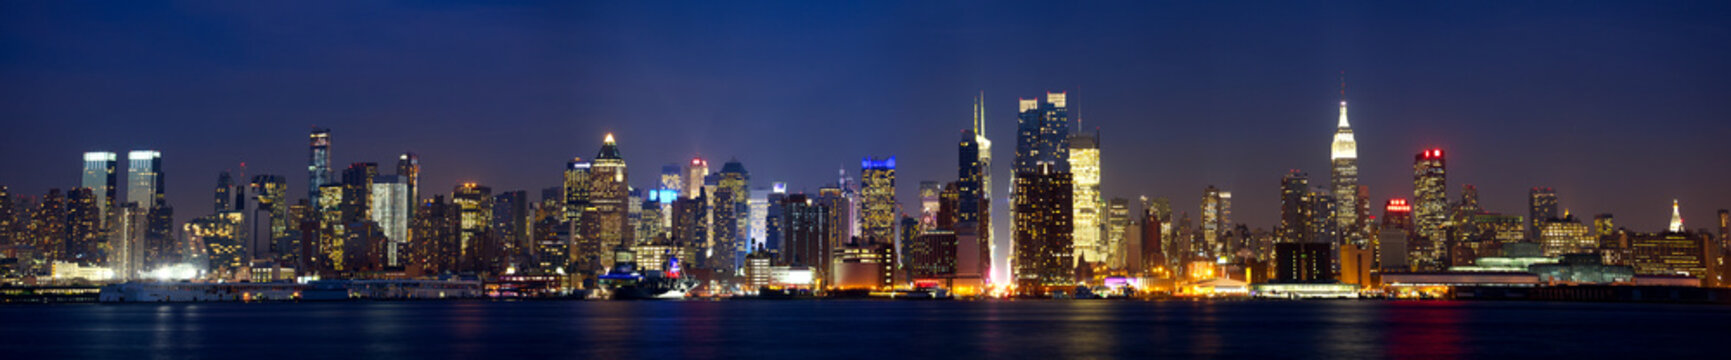 Manhattan skyline panorama at dusk, New York City